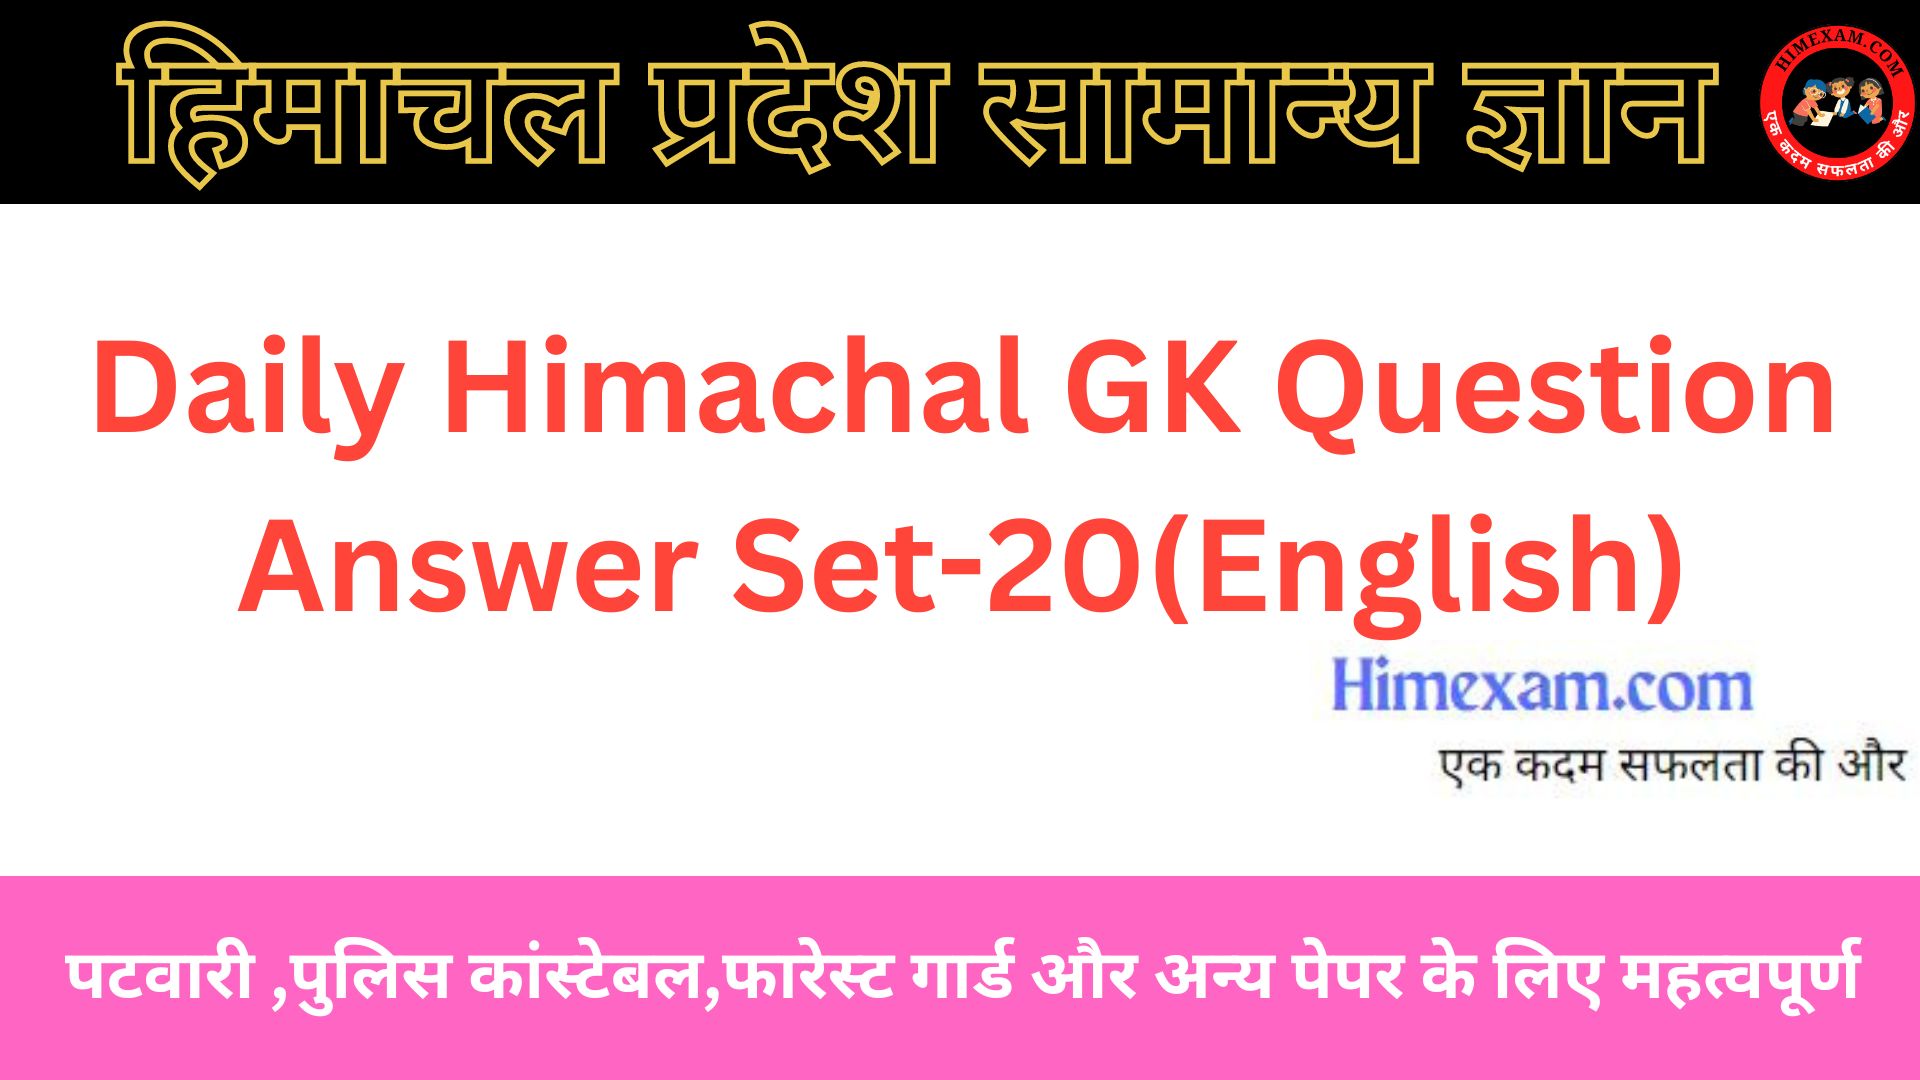 Daily HP GK Online Quiz Set-20 (English)